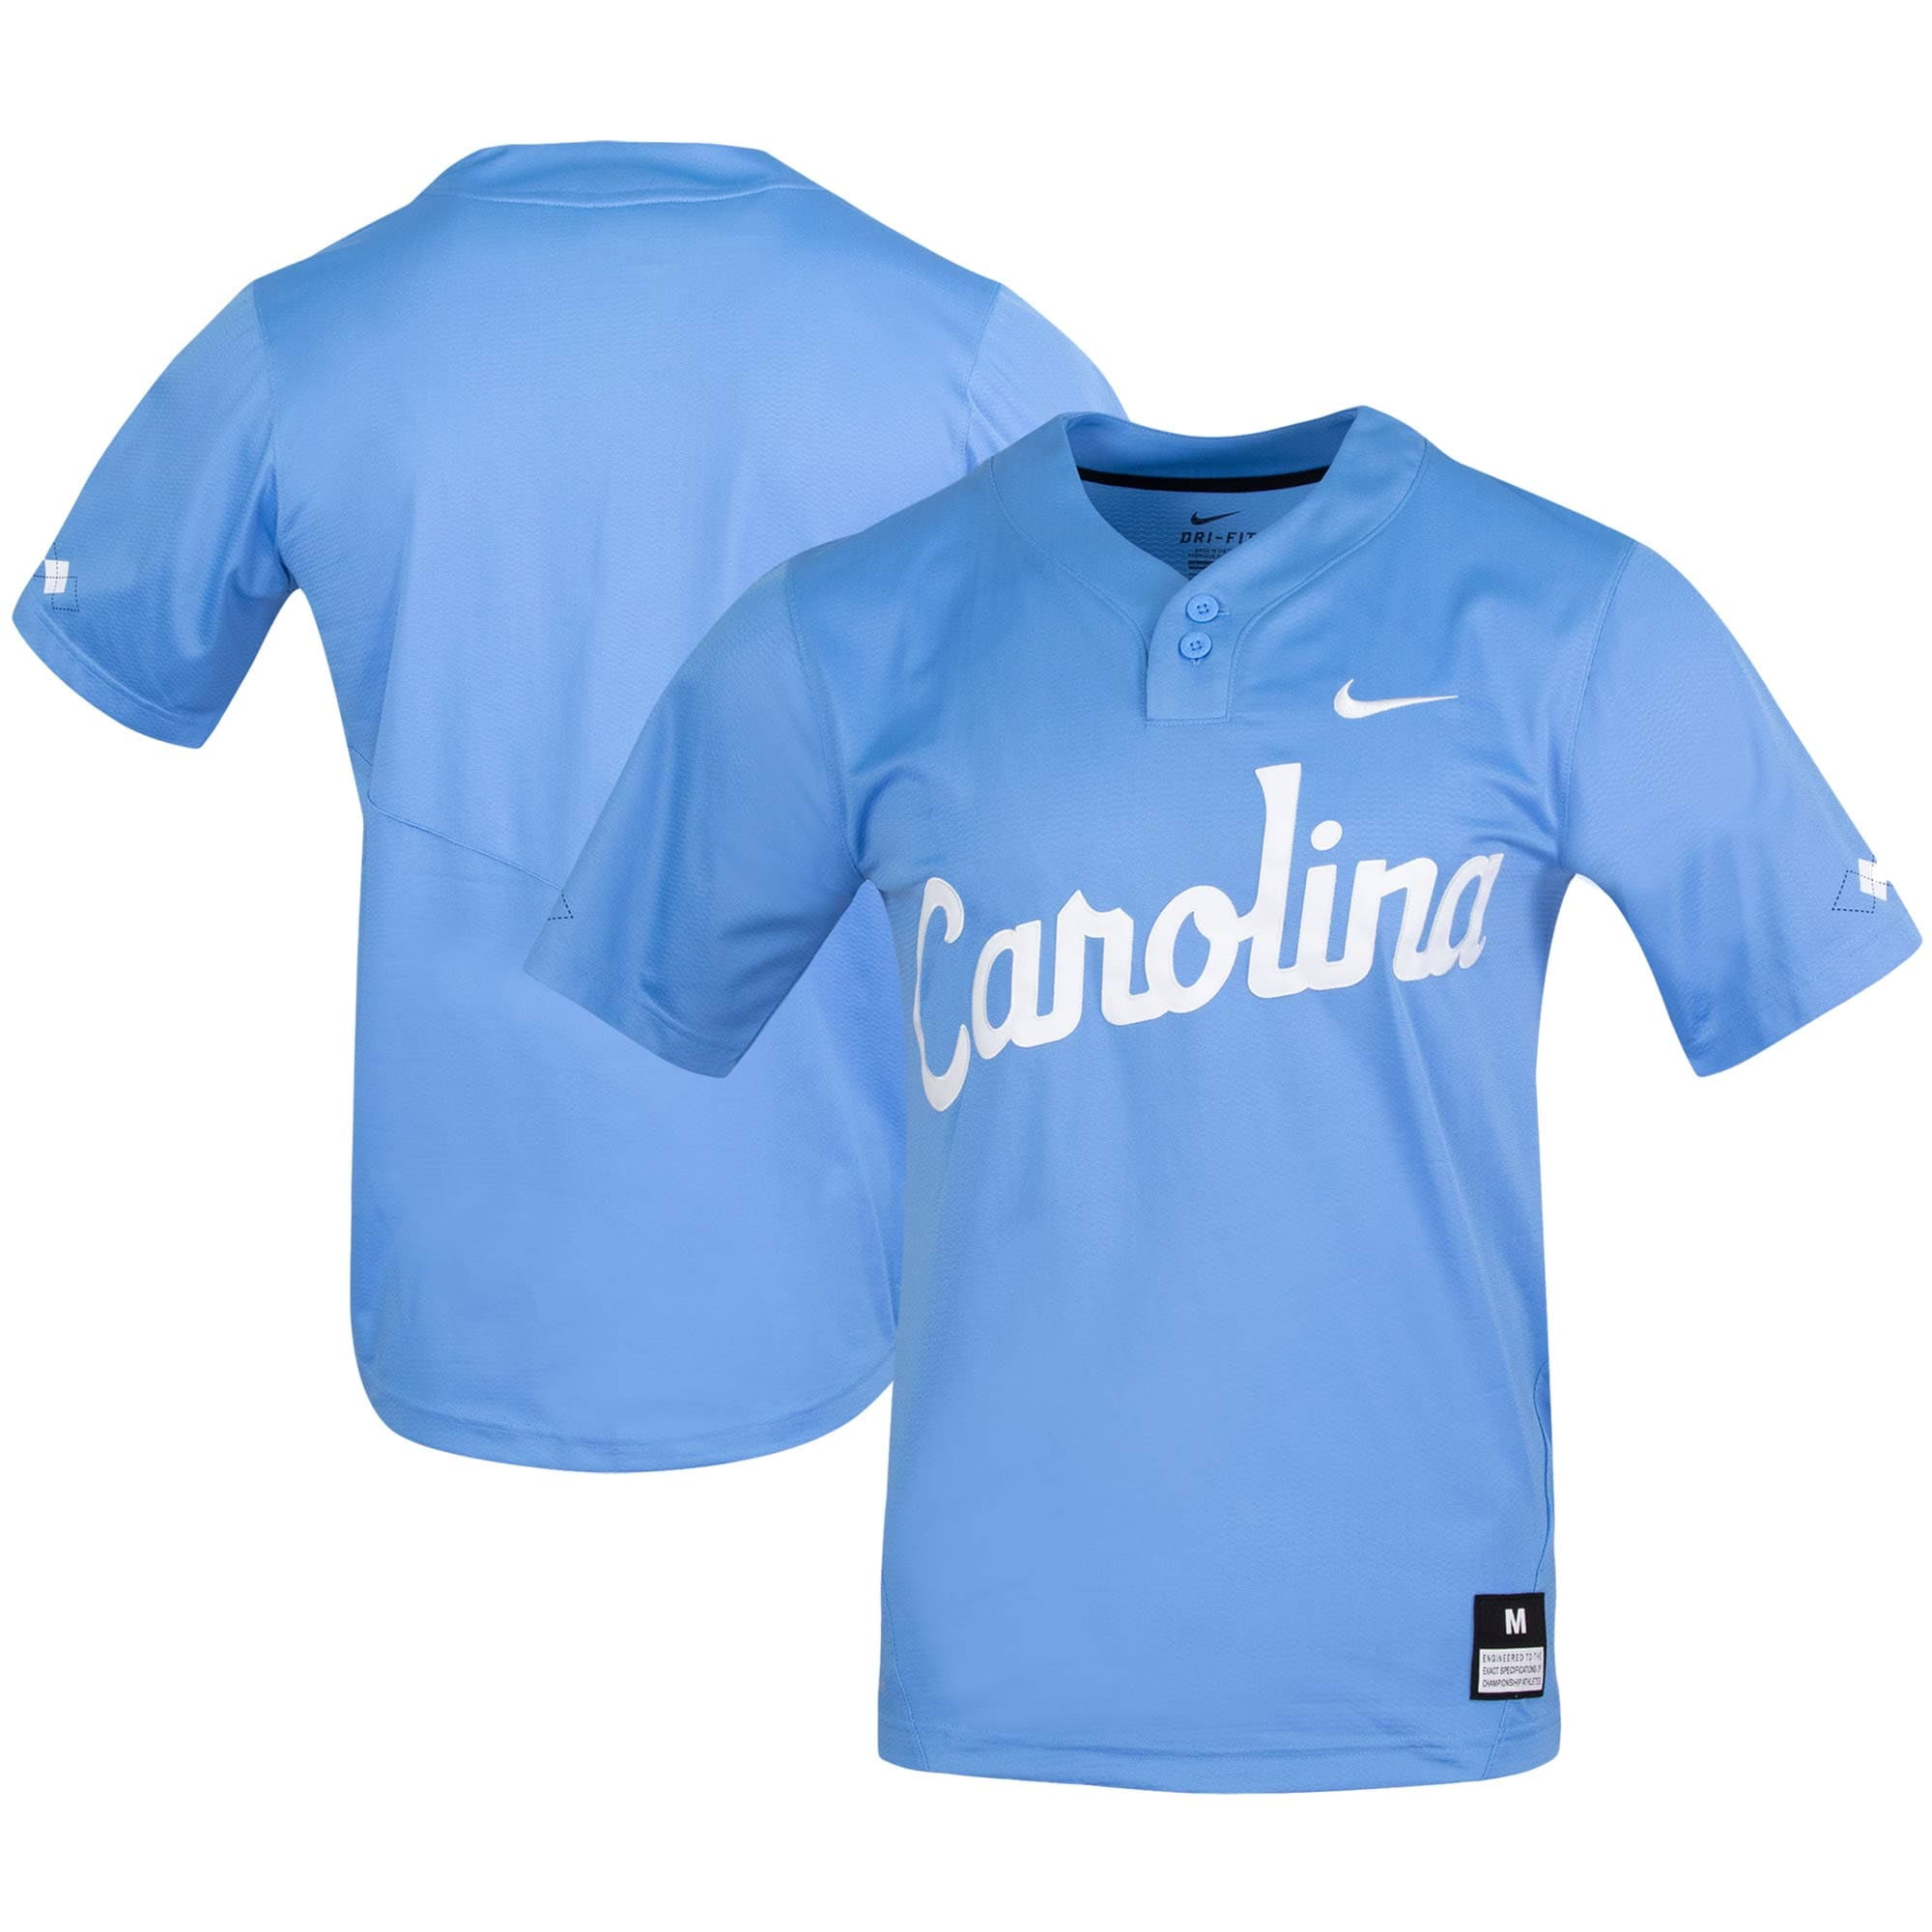 carolina blue jersey